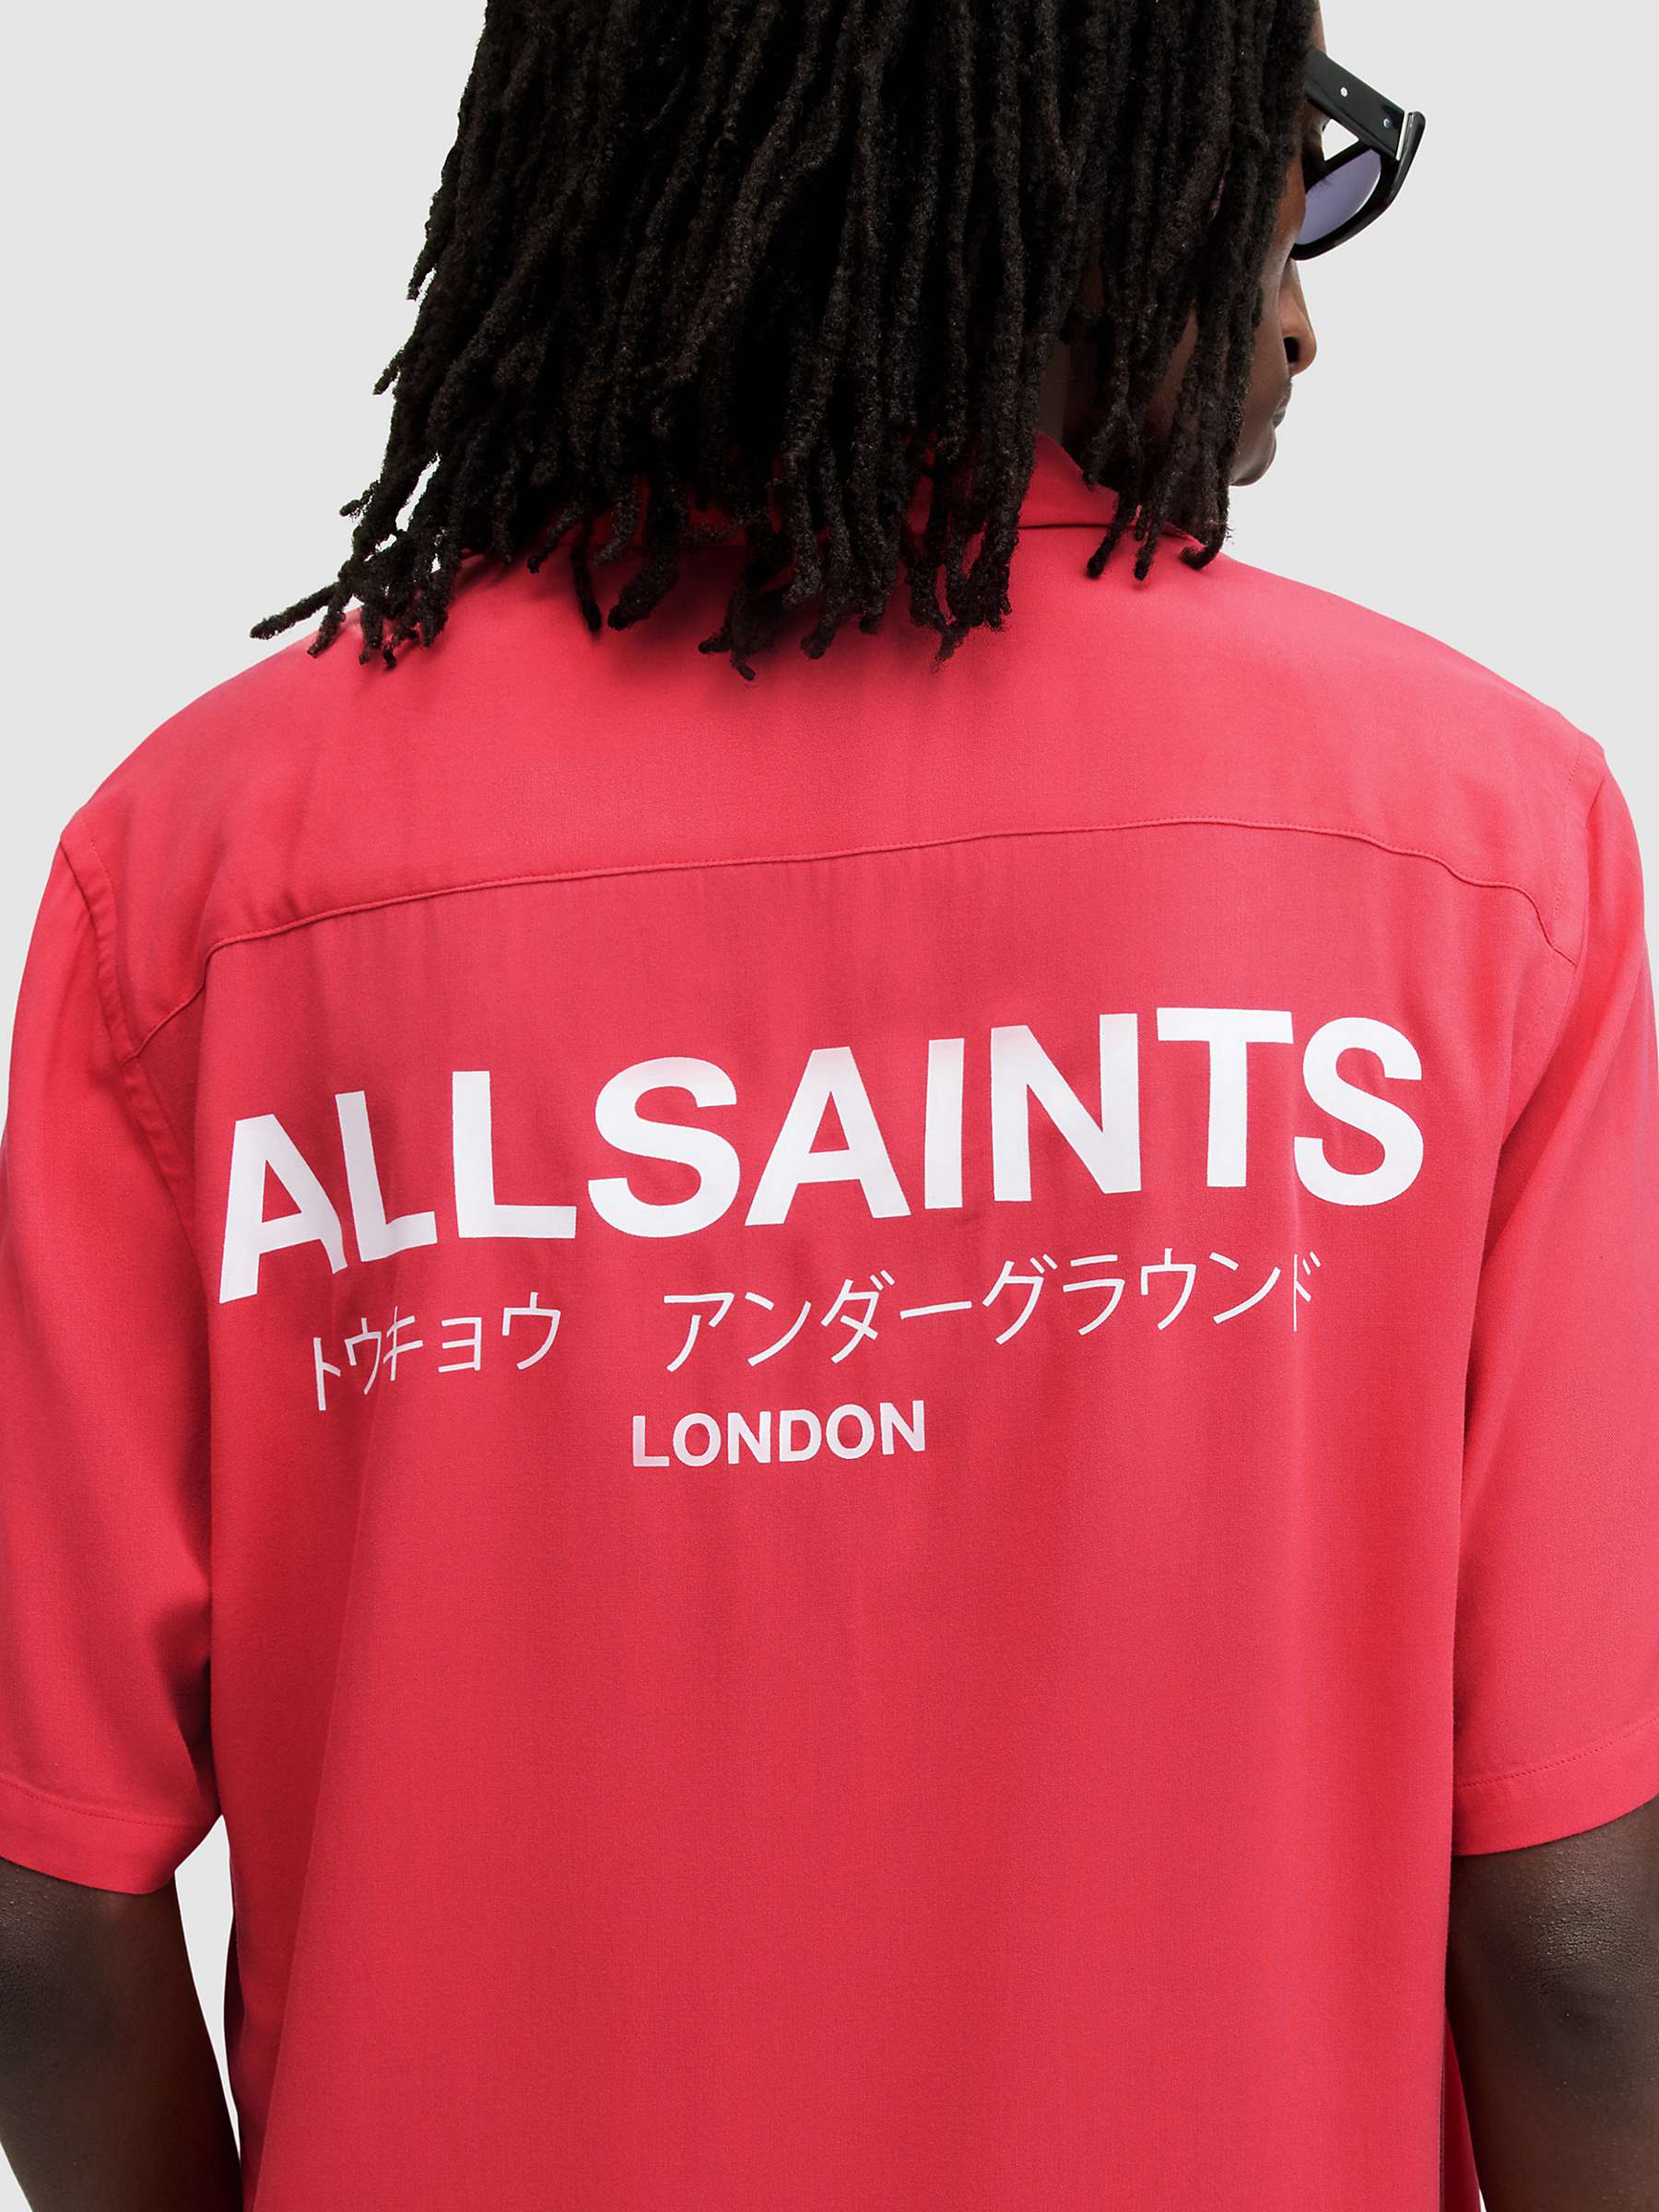 Buy AllSaints Underground Short Sleeve Revere Collar Shirt Online at johnlewis.com